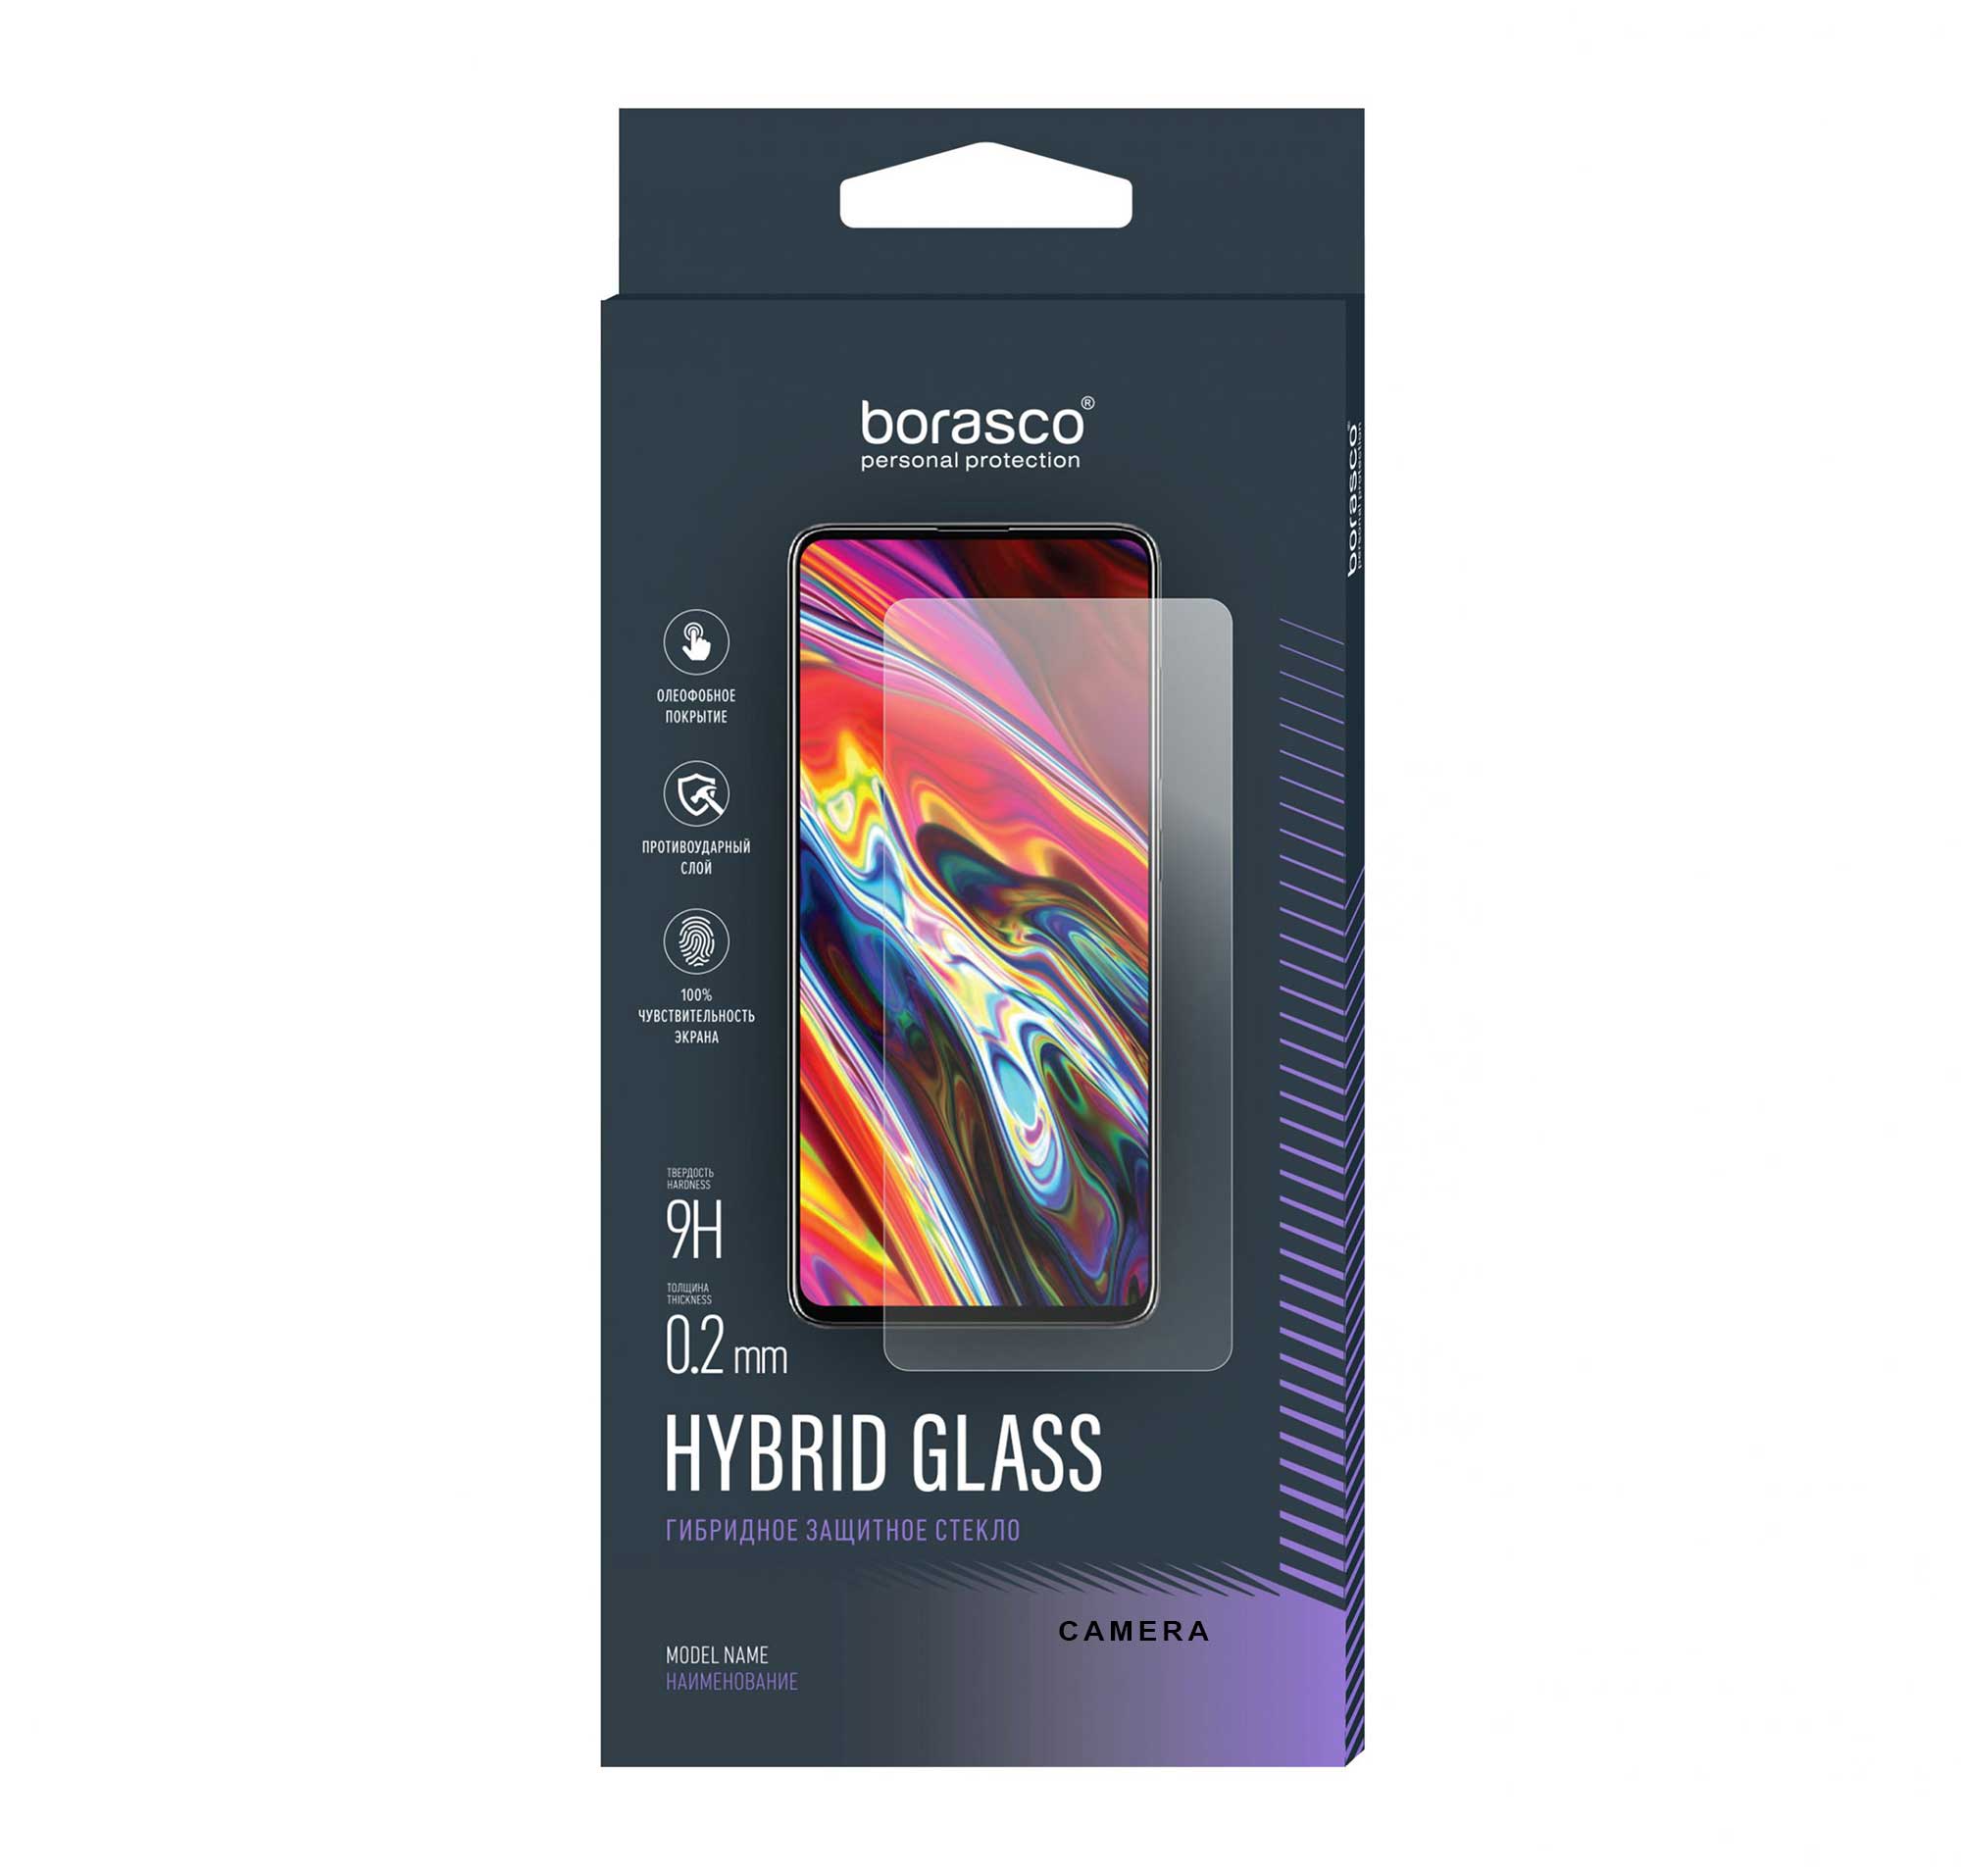 Защитное стекло (Экран+Камера) BoraSCO Hybrid Glass для Realme C21Y защитное стекло borasco для realme c3 5 6i c11 c15 с20 c21 c21y c25 c25s с11 2021 0 26mm transparent 38844